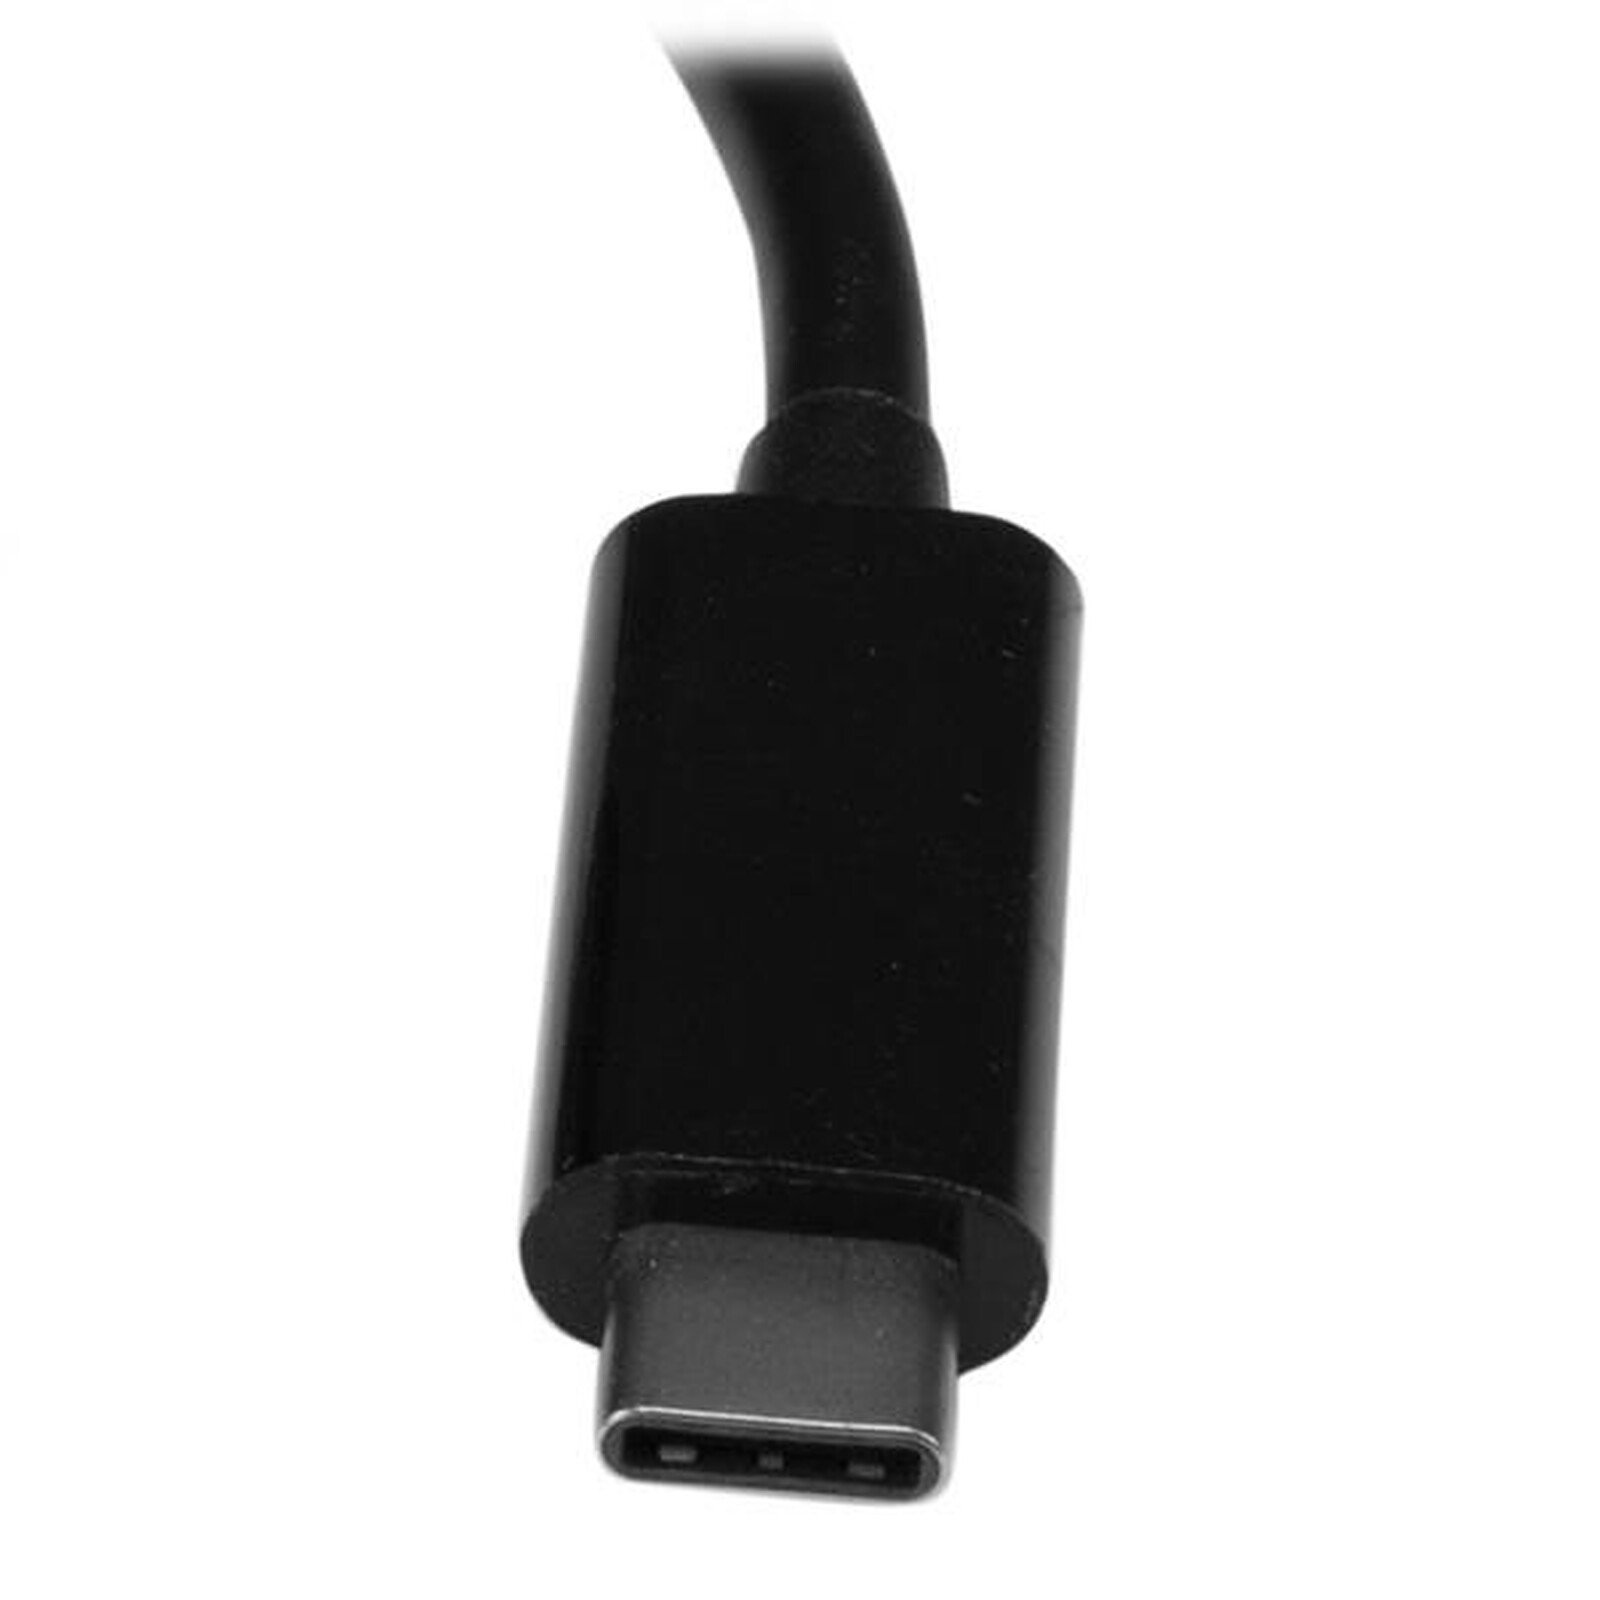 StarTech.com Adattatore da USB-C a Gigabit Ethernet Hub USB 3.0